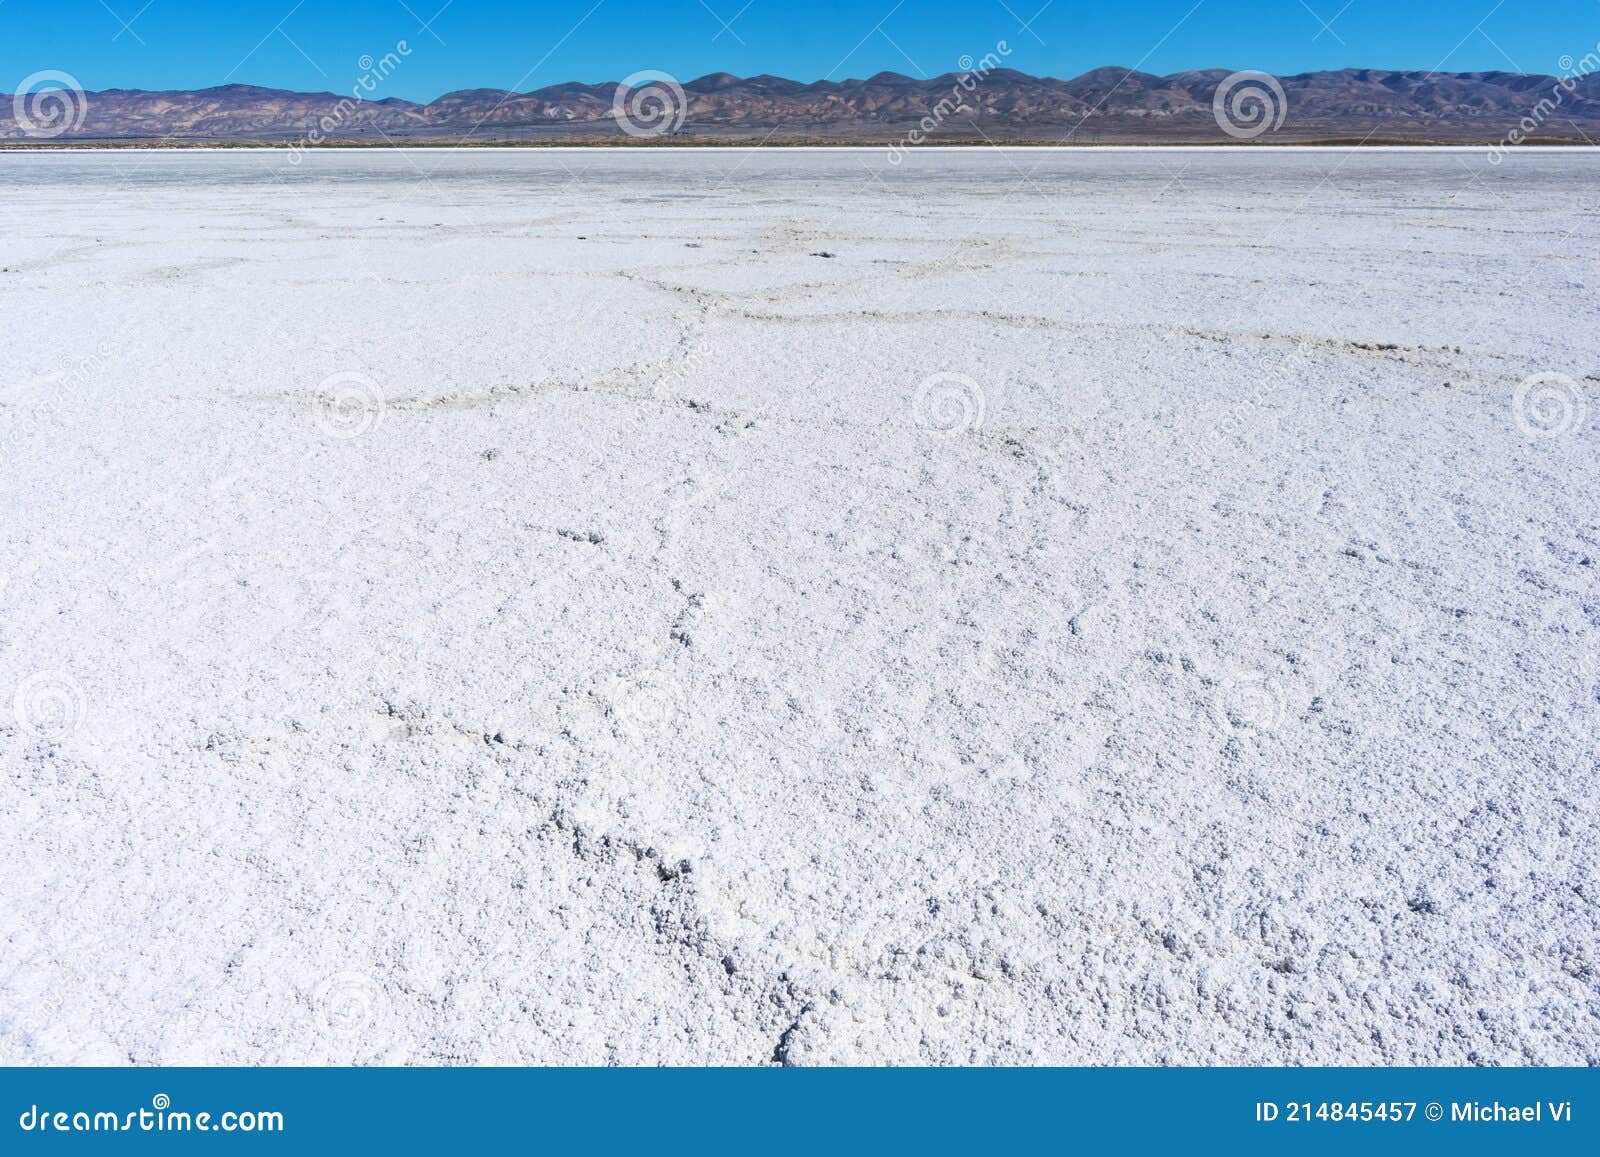 white salt flats of dry soda lake at carrizo plain national monument